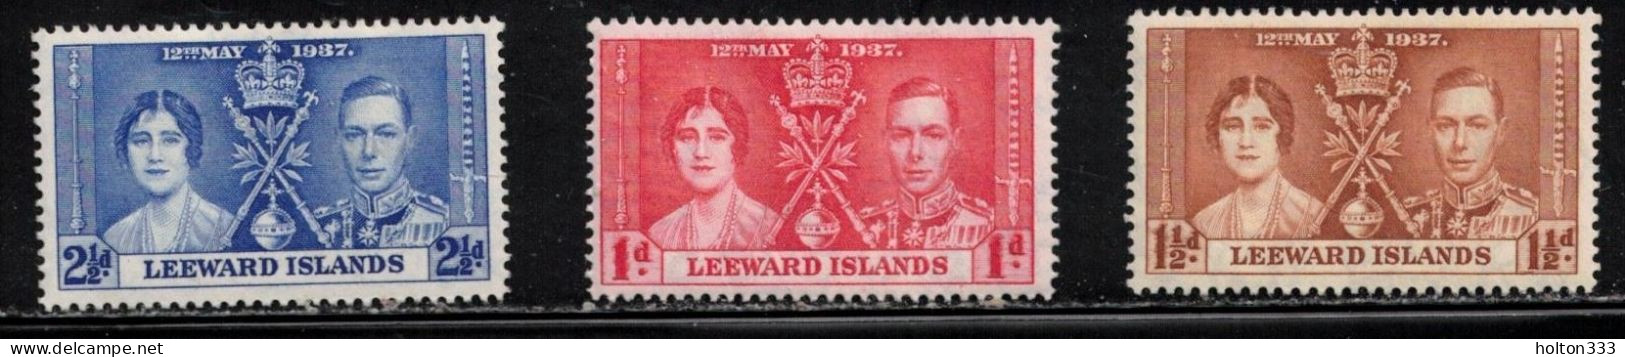 LEEWARD ISLANDS Scott # 100-2 MH - KGVI Coronation Issue - Leeward  Islands